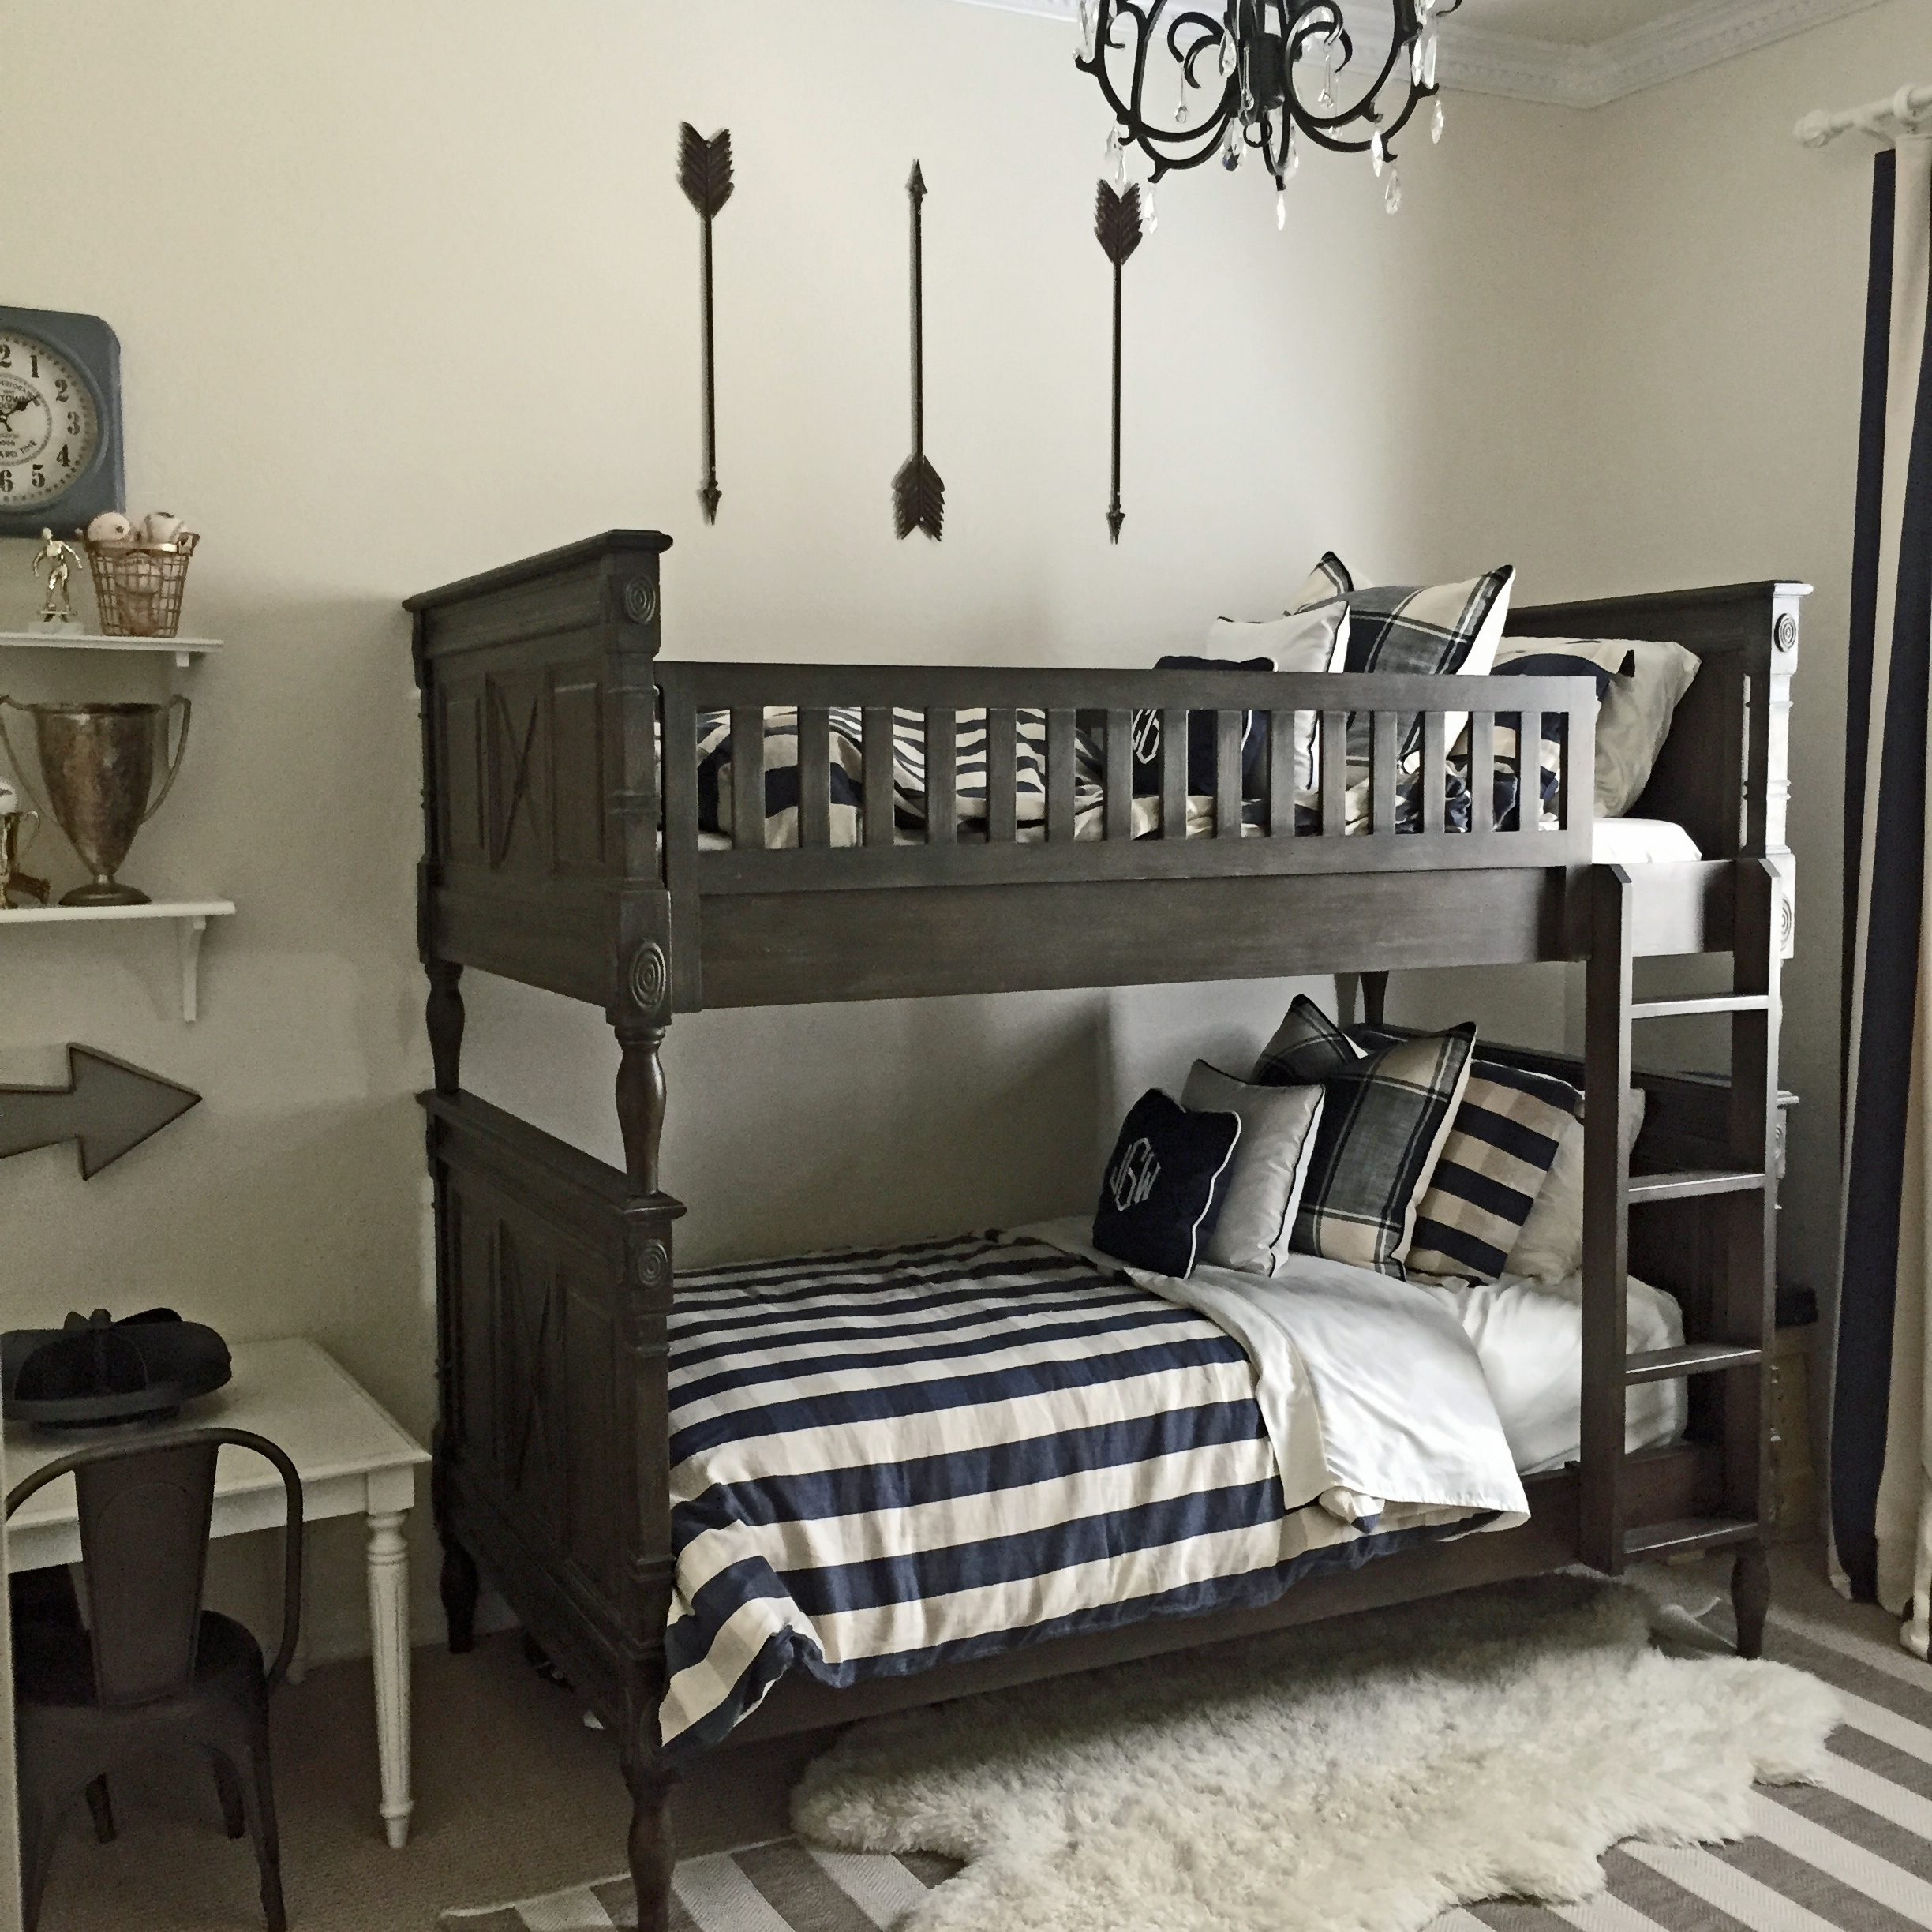 Classy boy's bedroom with bunkbeds